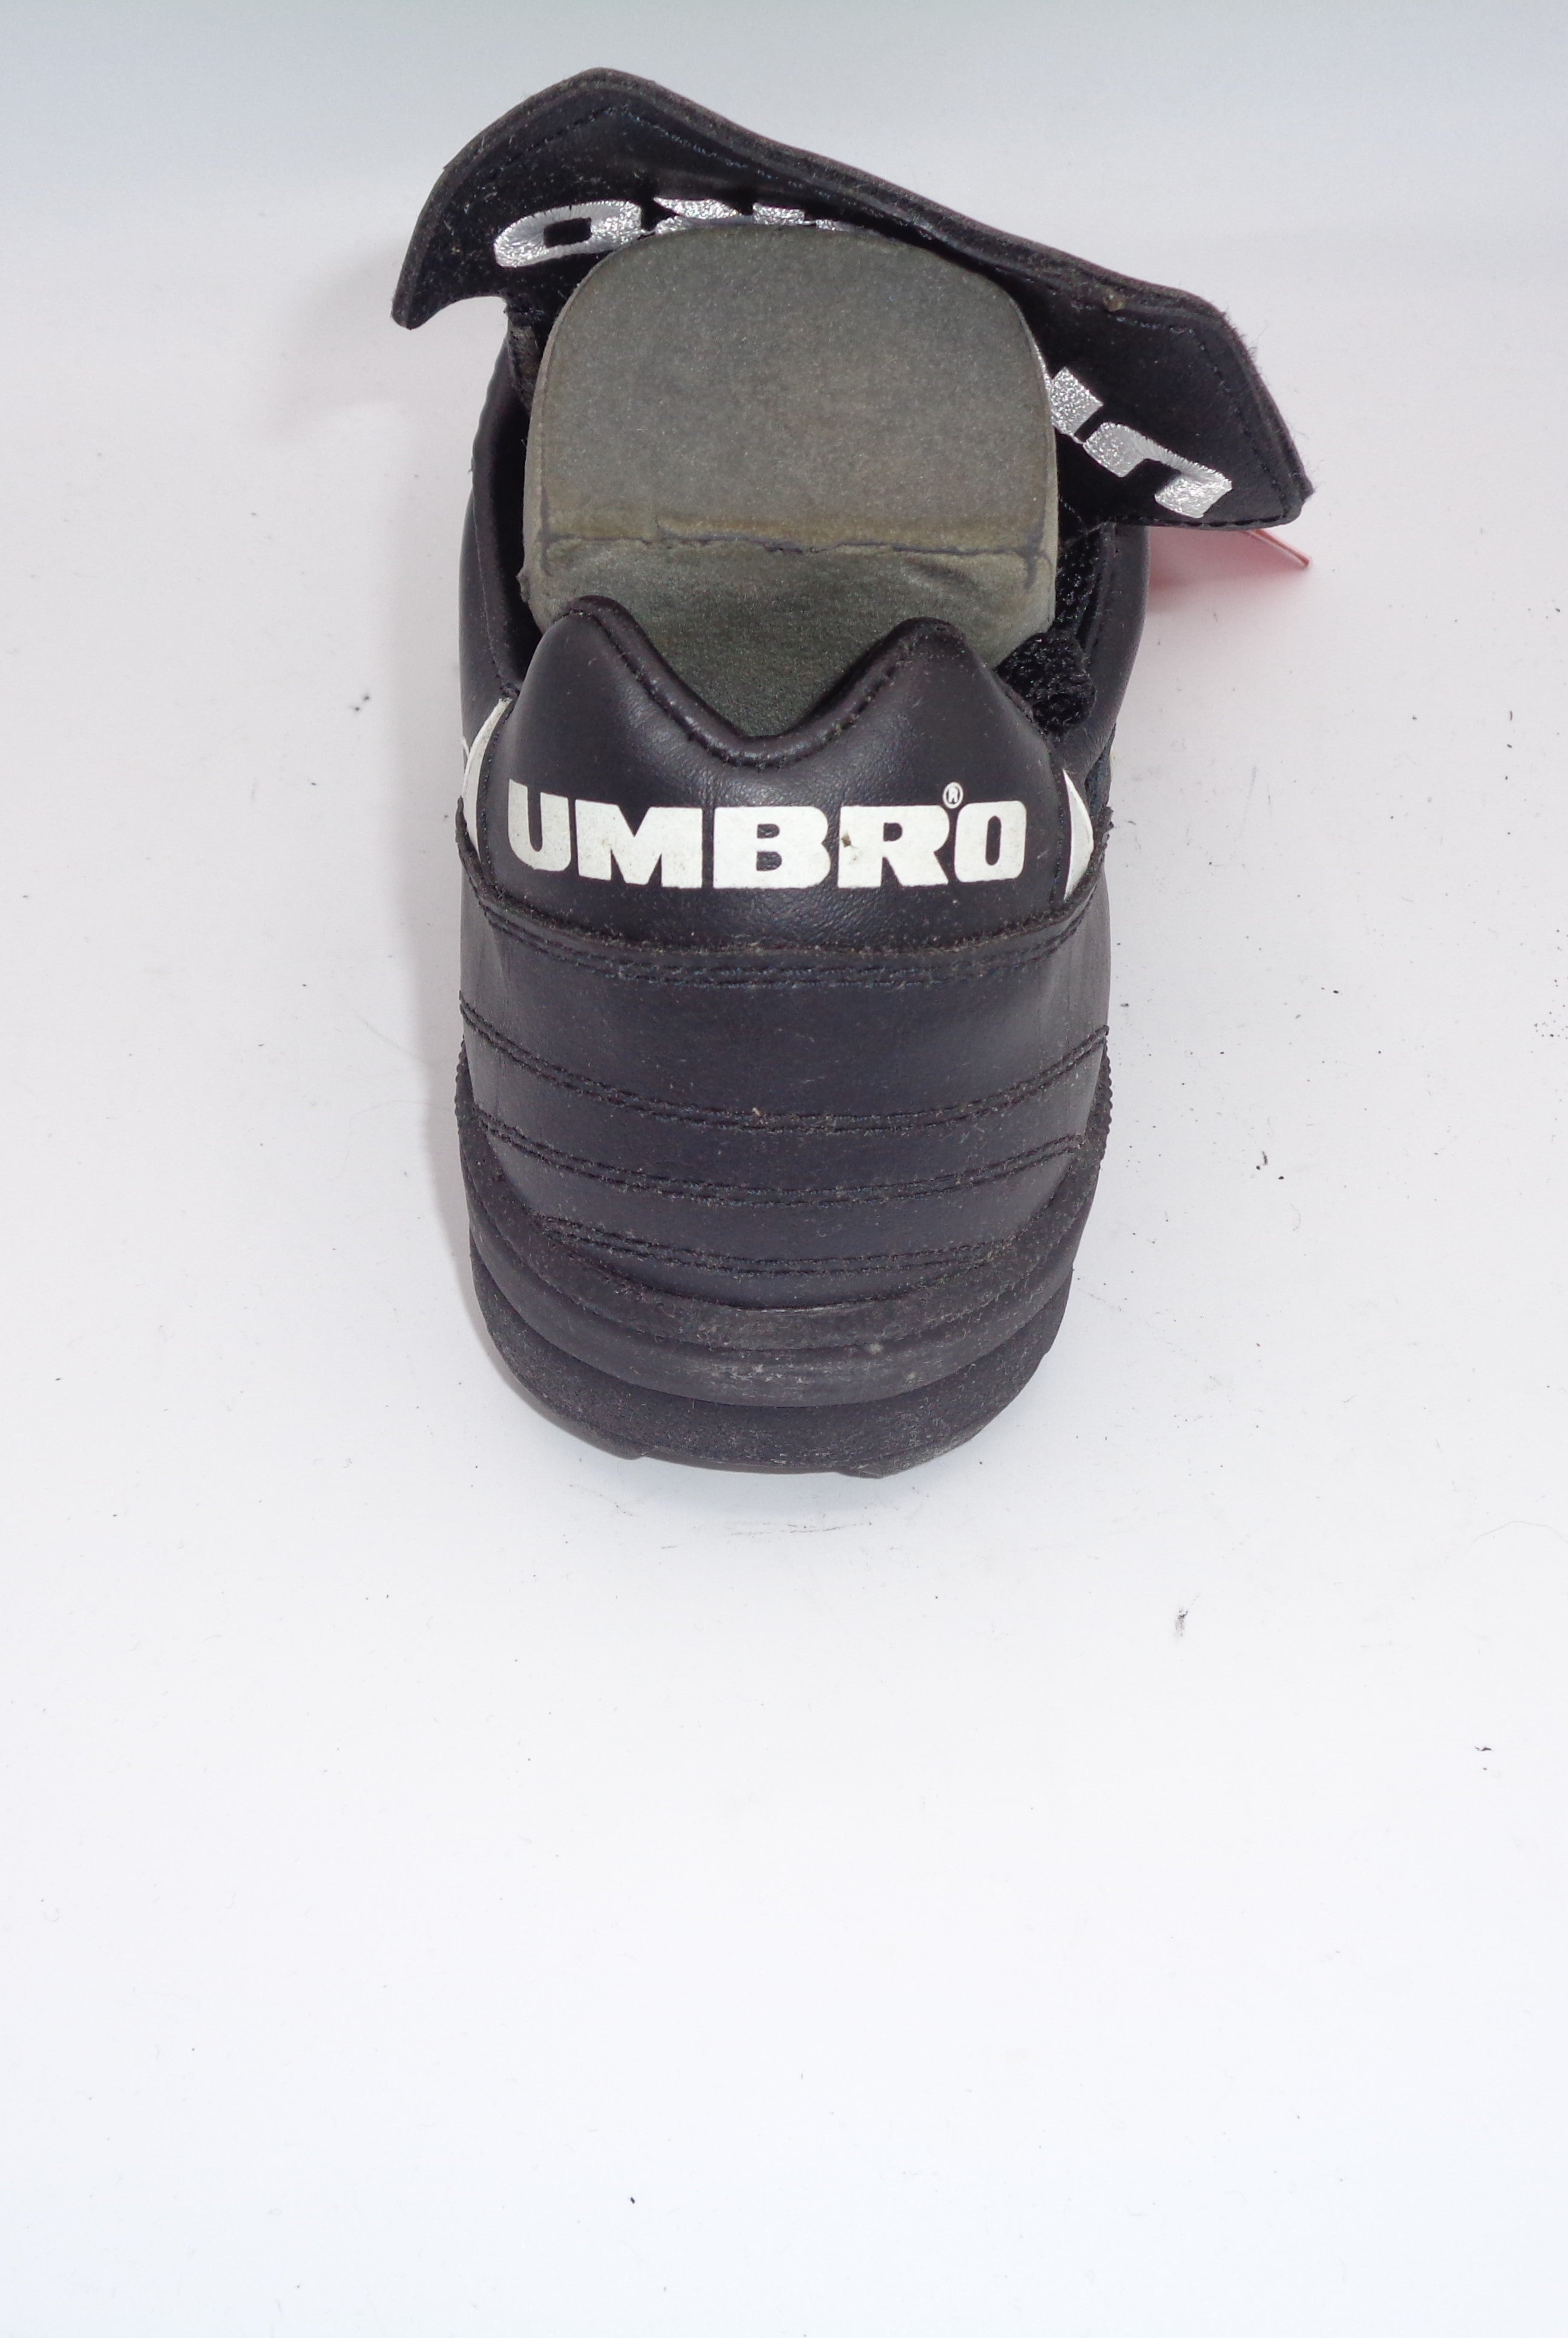 UMBRO SHEARER AS LEAGUE ASTRO FOOTBALL BOOTS - UMBRO - SIZE 5.5